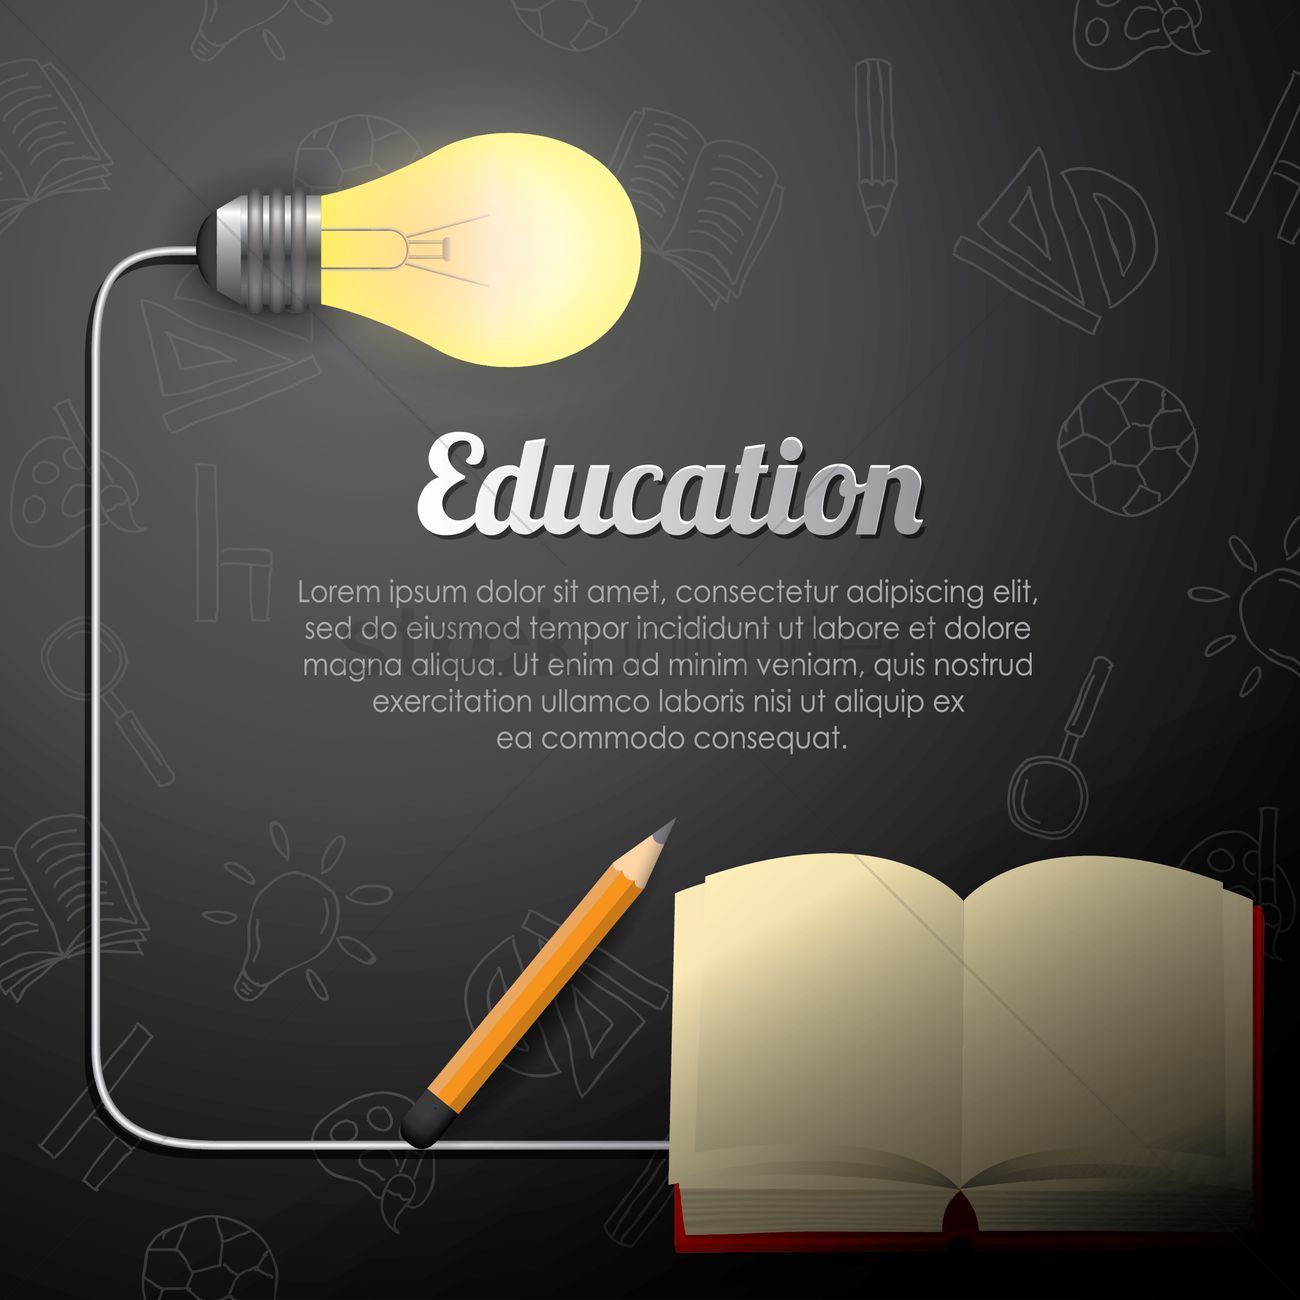 Education Wallpaper, HD Education Background on WallpaperBat